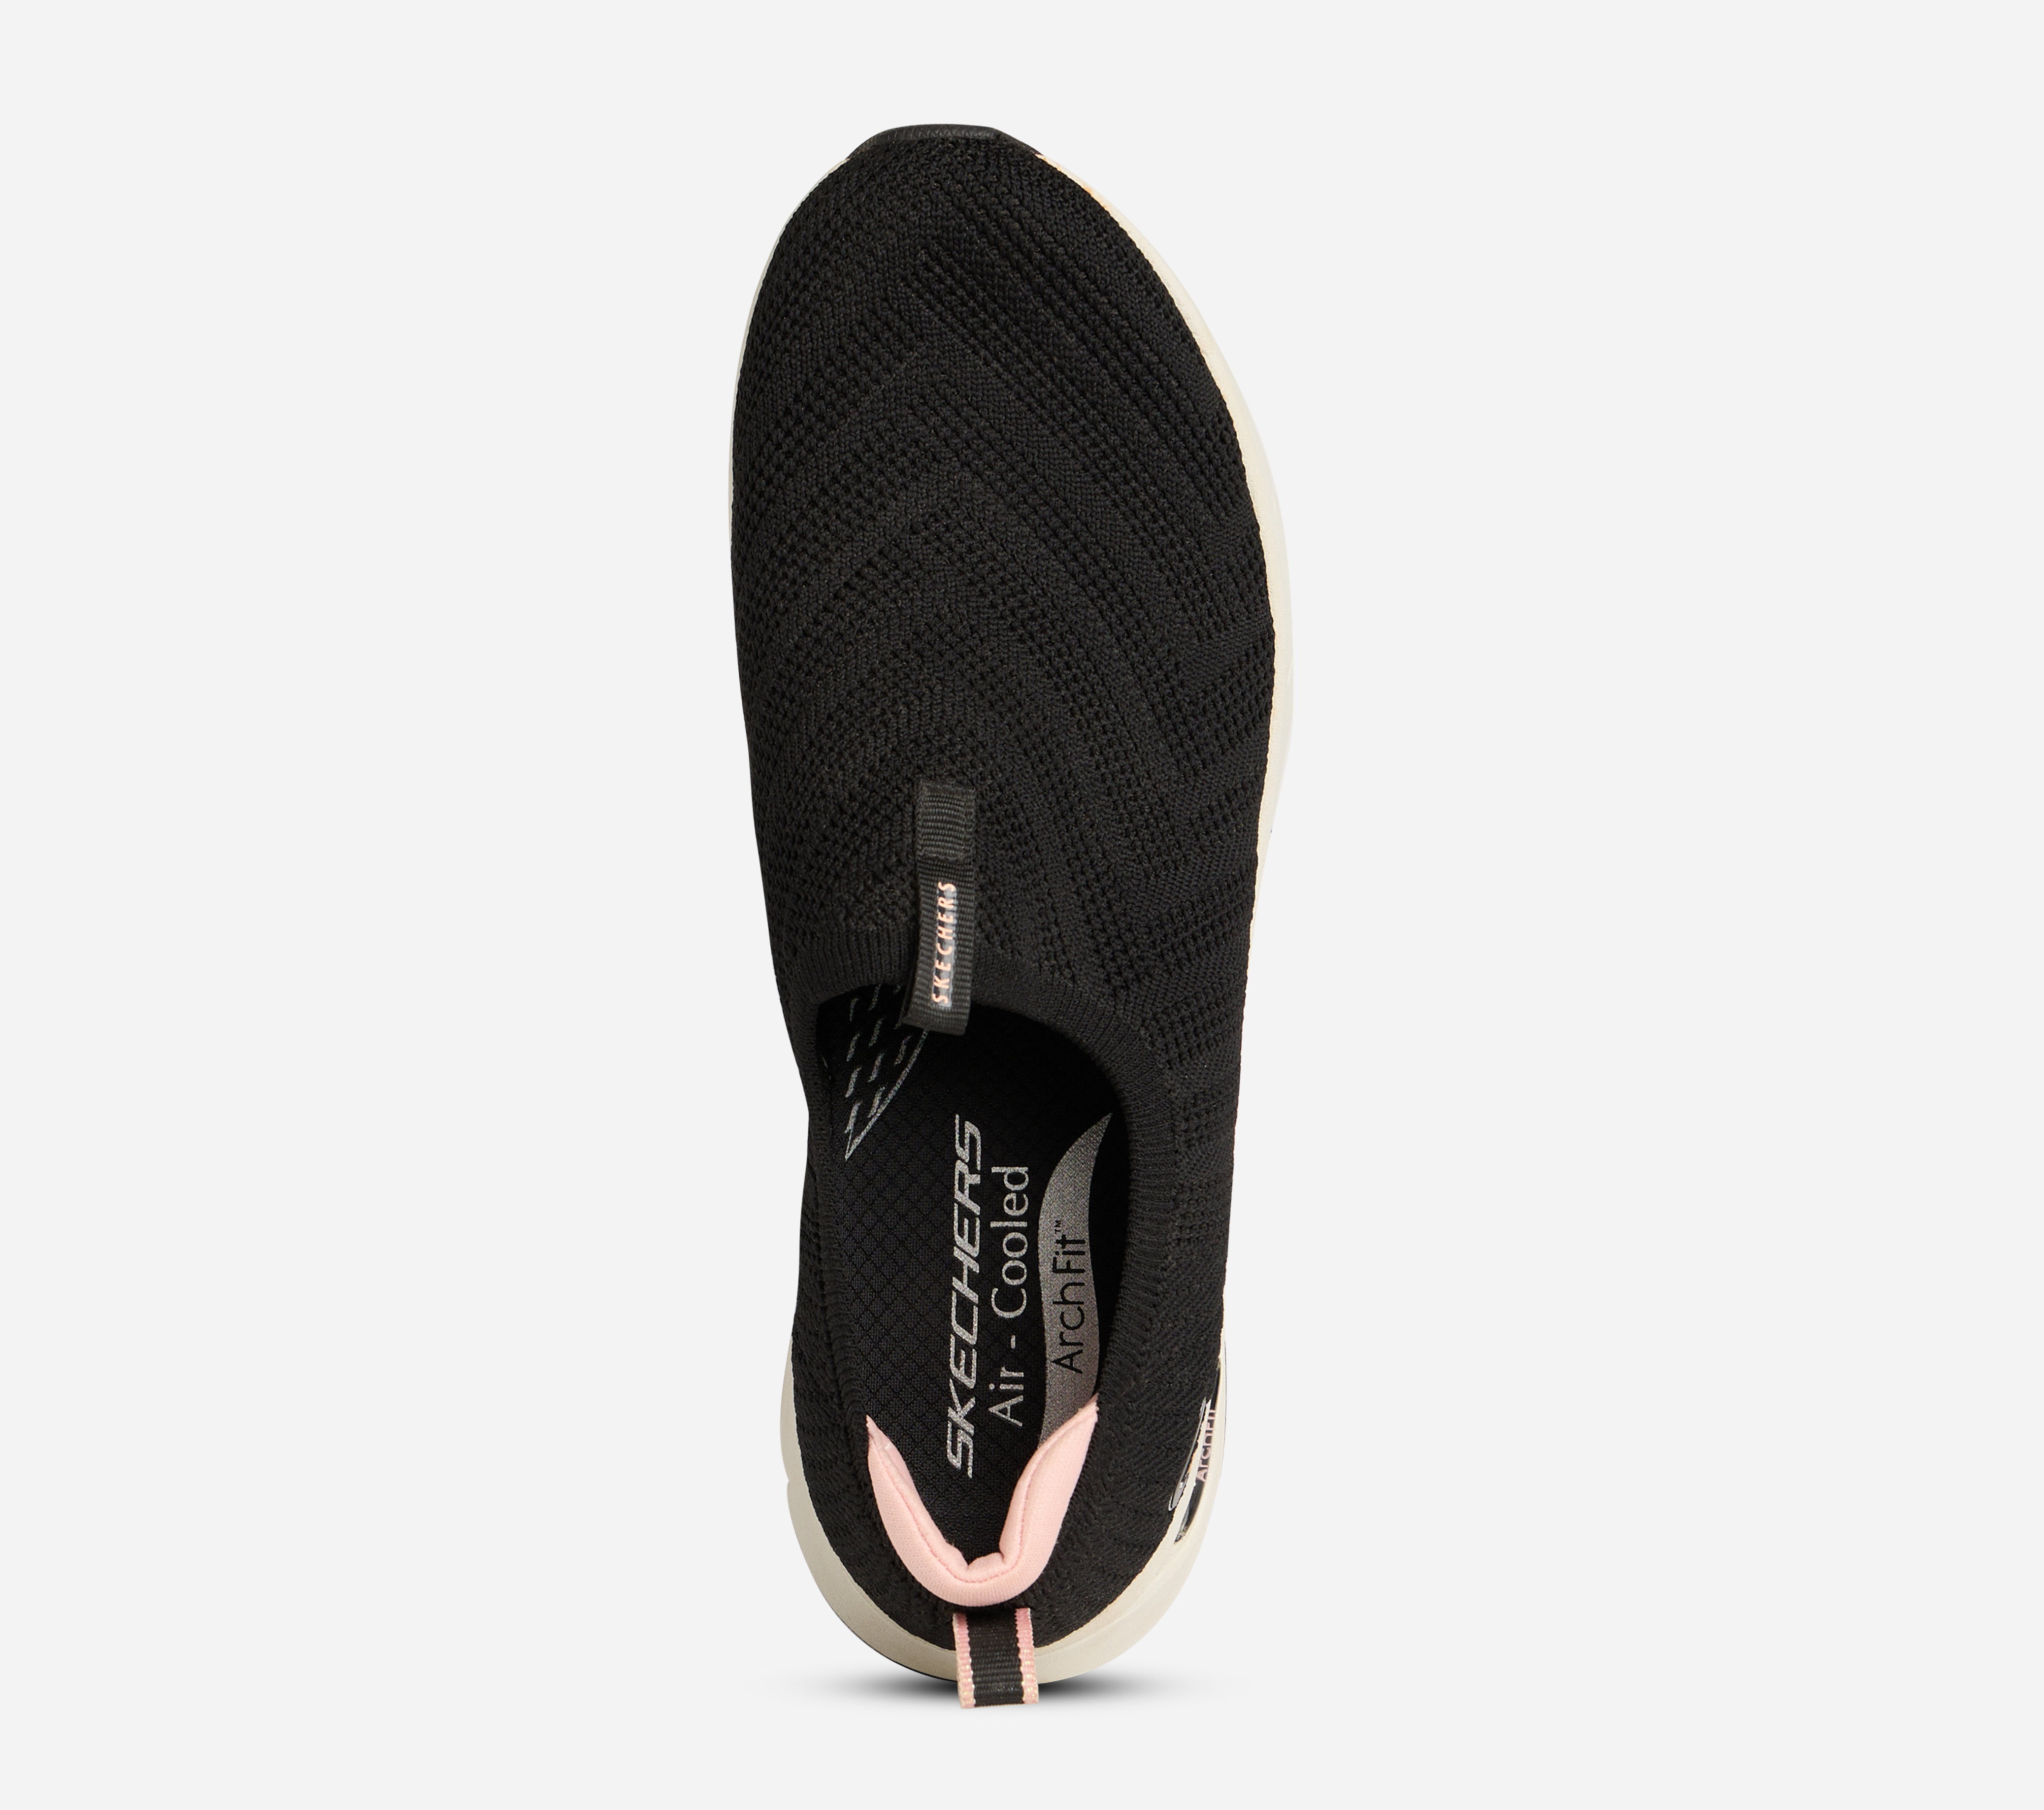 SKECH-AIR ARCH FIT - TOP PICK, BLACK/LIGHT PINK Footwear Bottom View